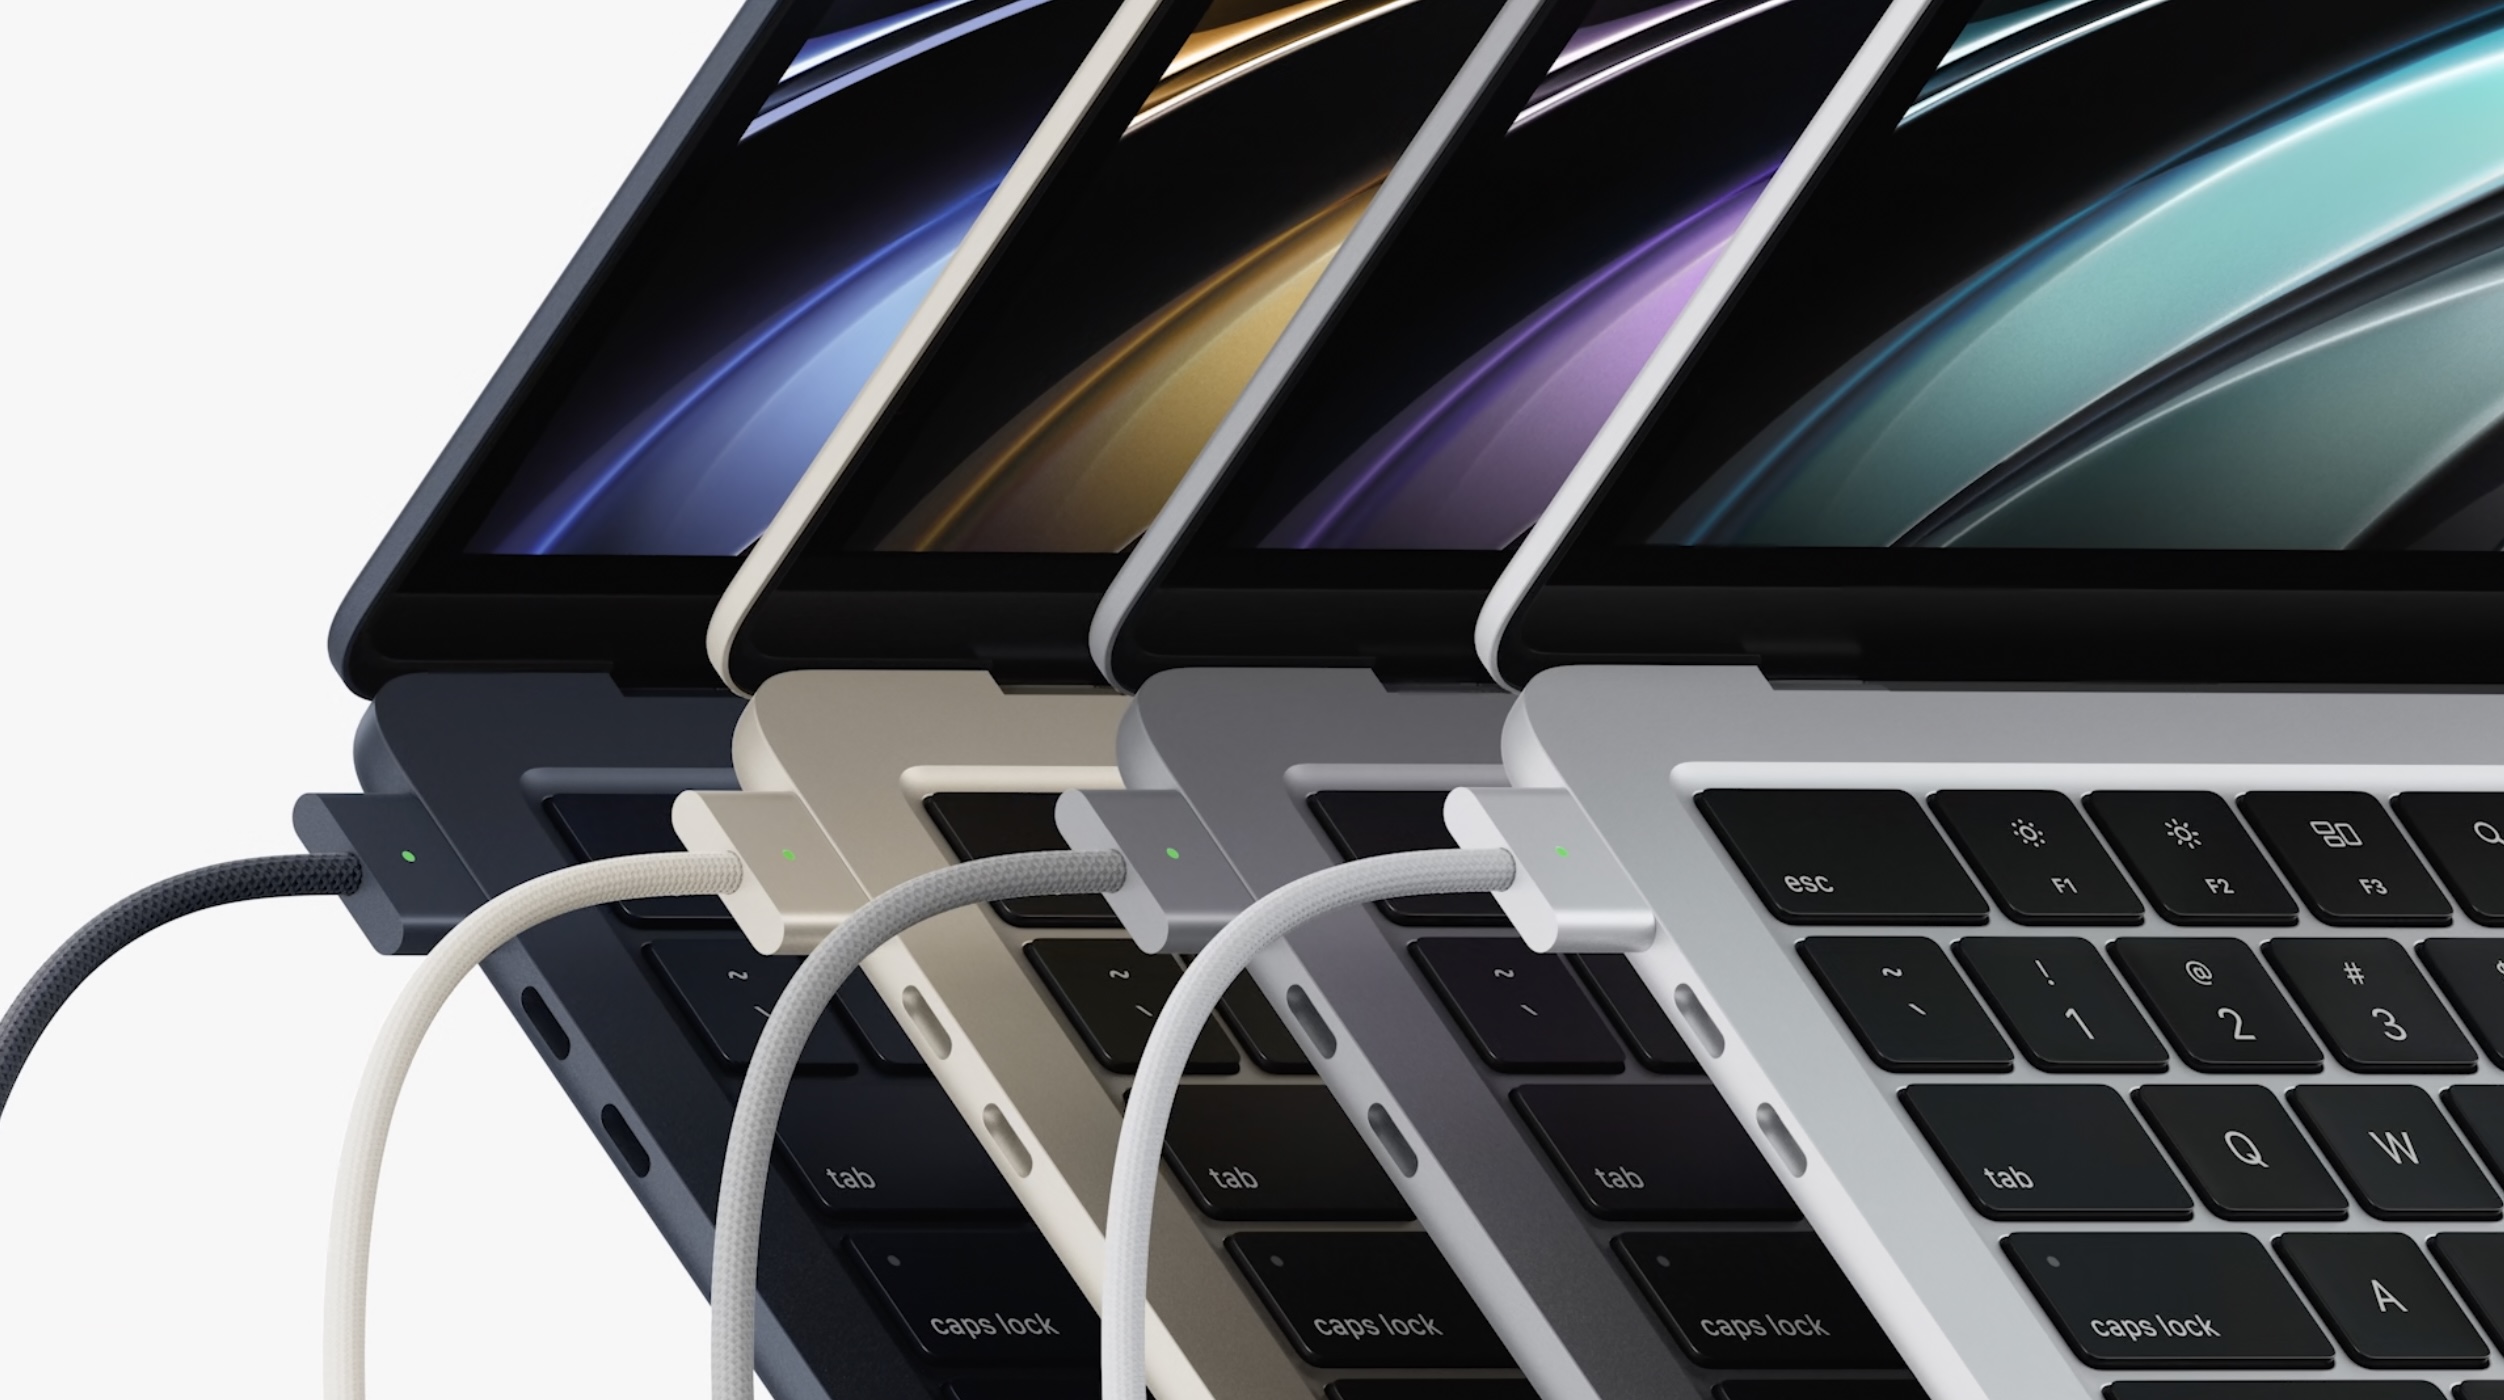 MacBook Air redesign introduces MagSafe charging